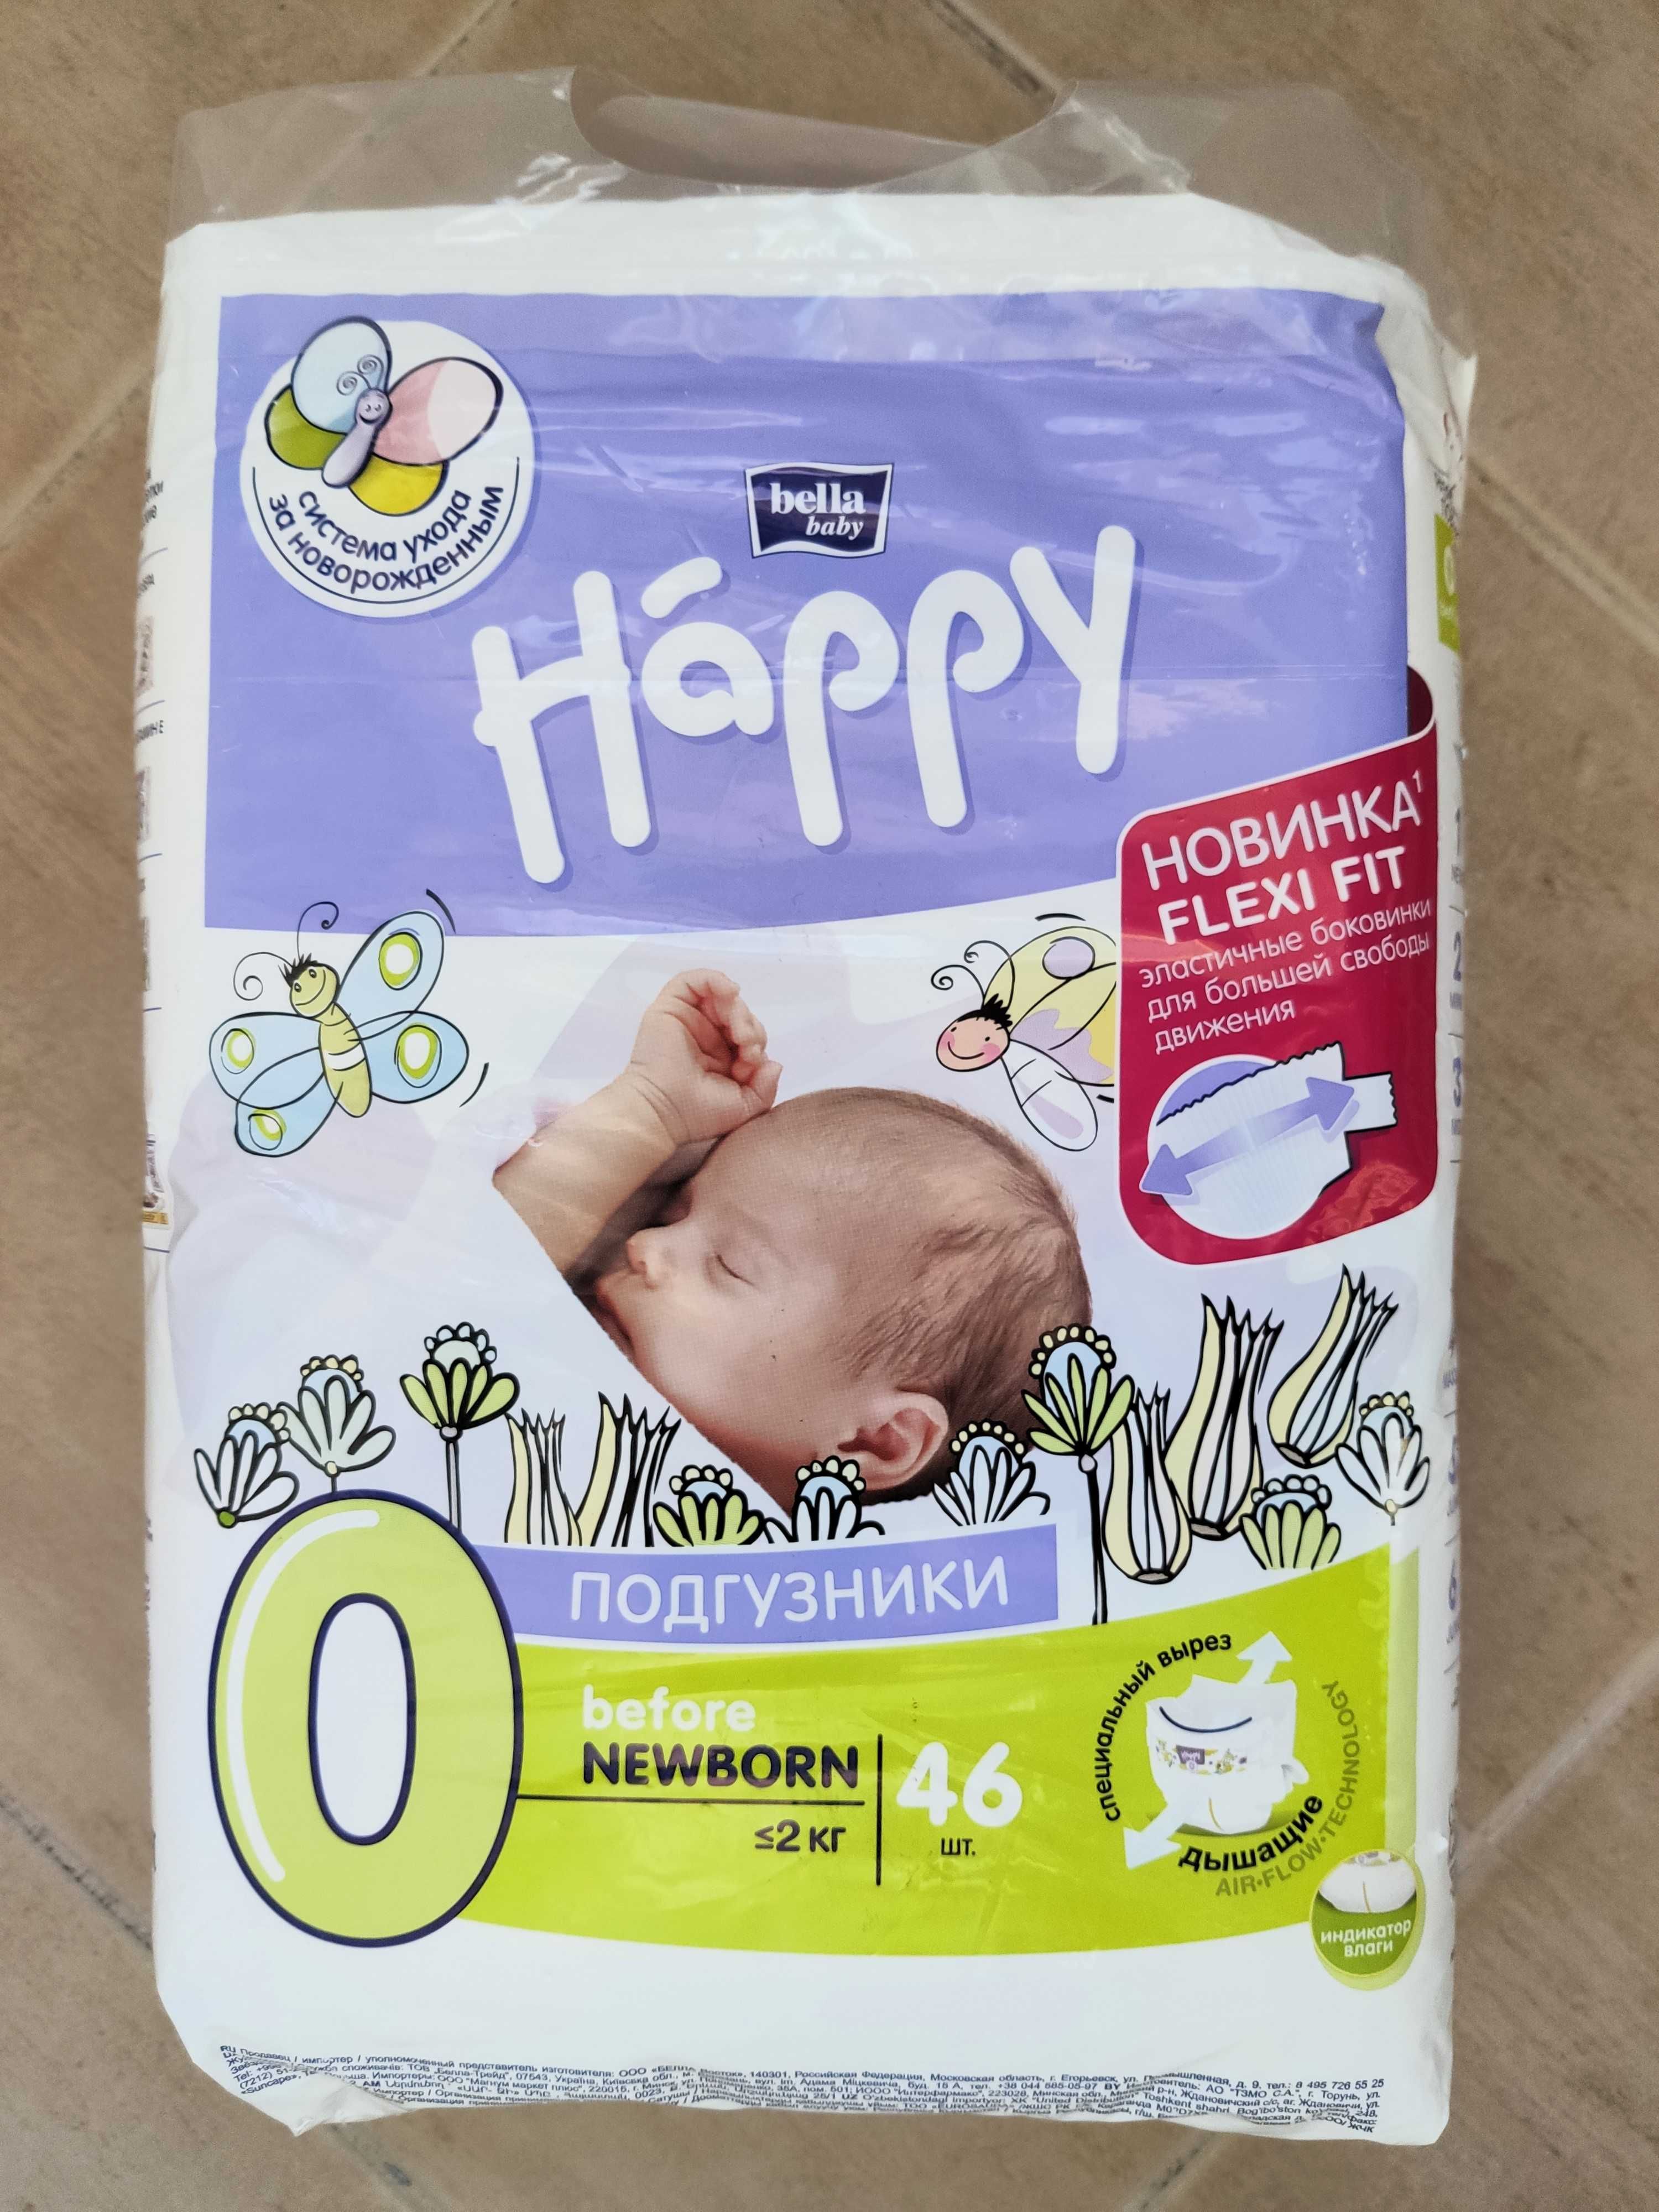 Підгузки дитячі Happy Bella Baby Before Newborn вага 0-2 кг, 46 шт.